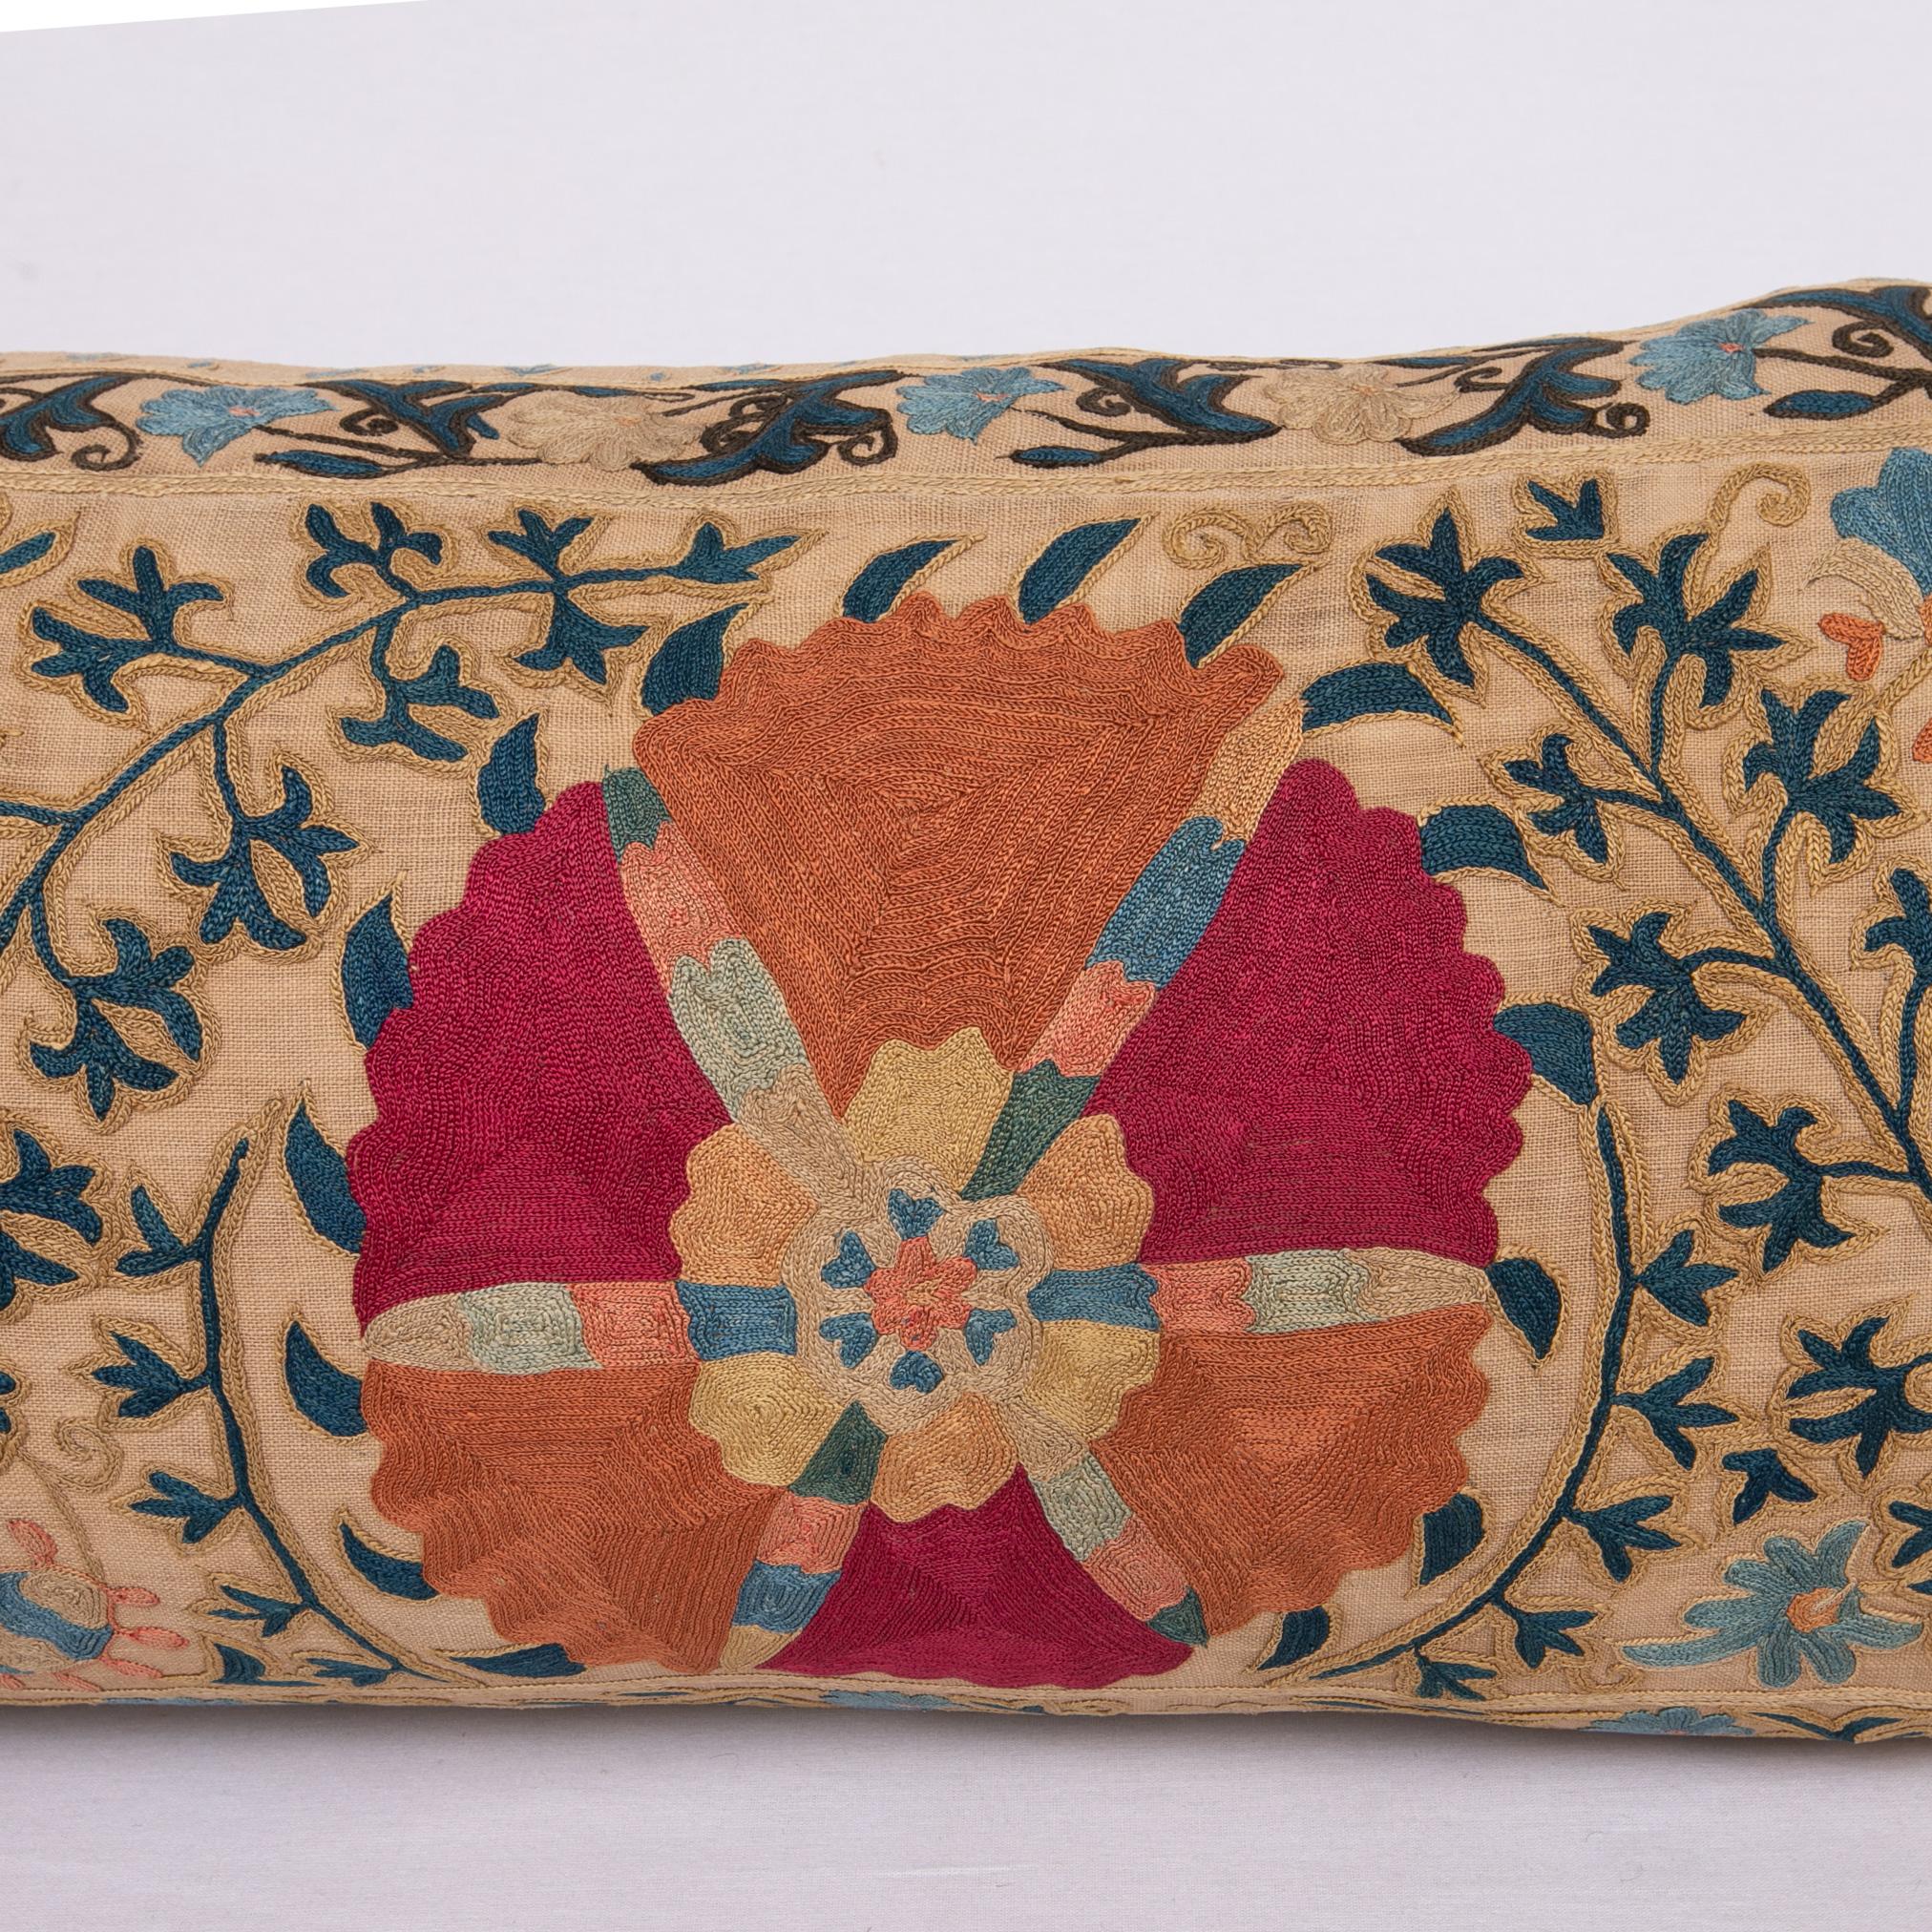 Uzbek Antique Suzani Pillowcase / Cushion Cover Made from a Mid 19th c Suzani